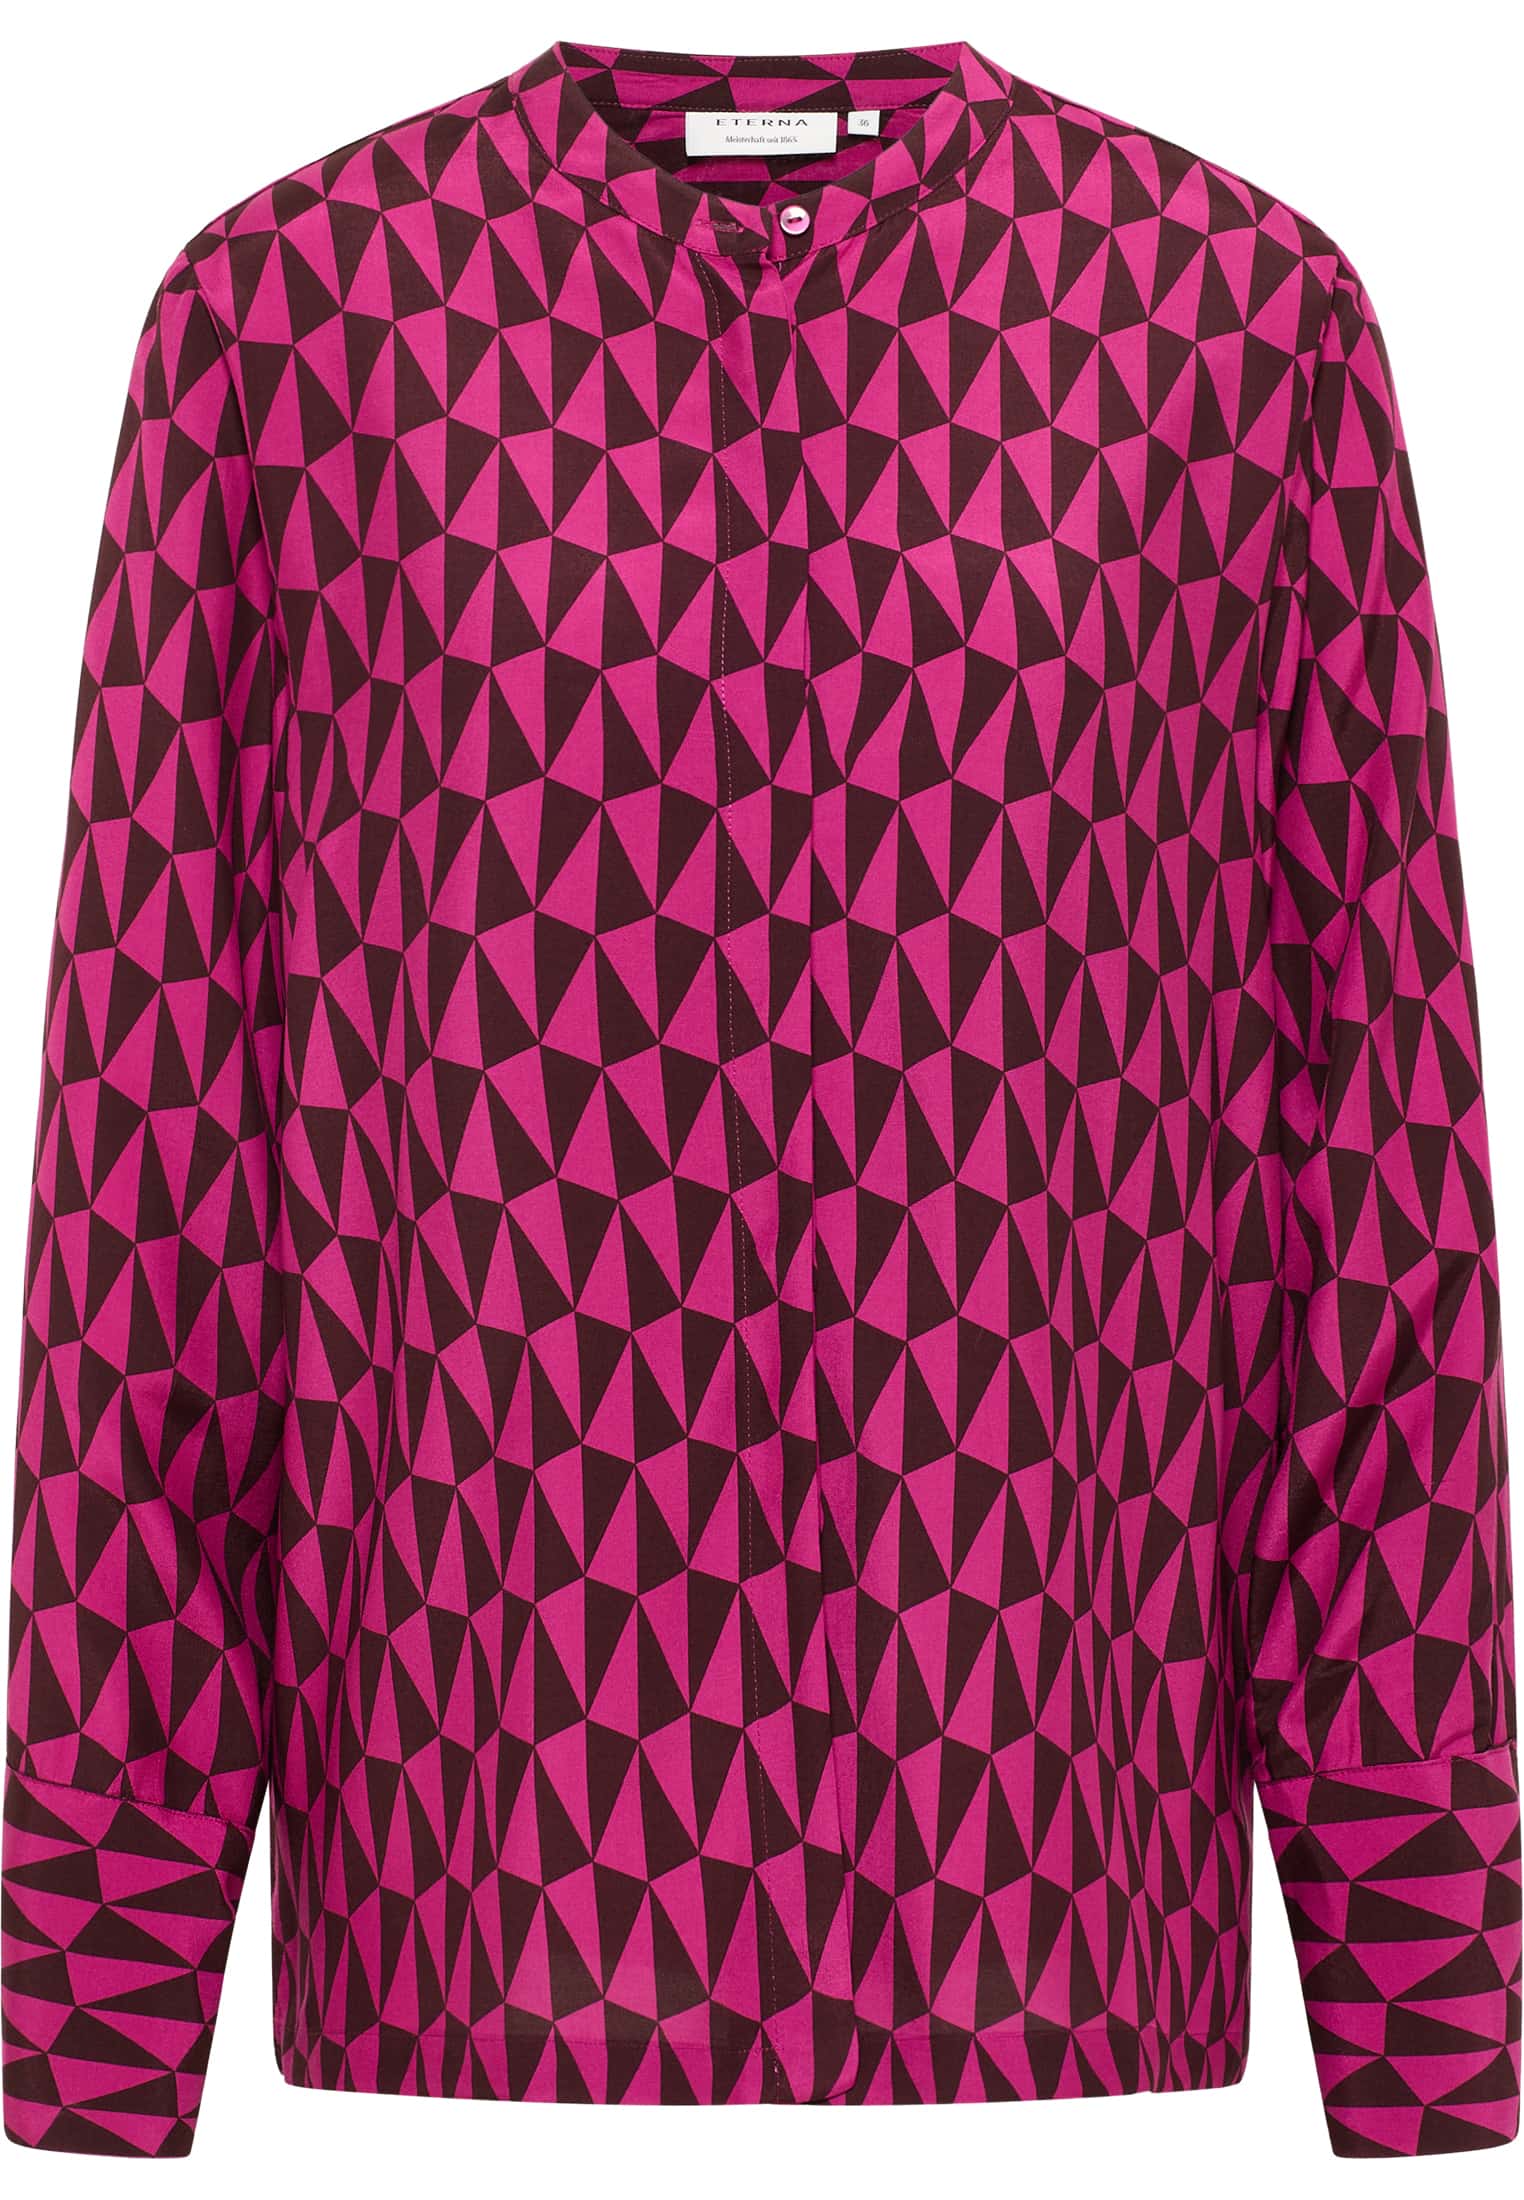 Blusenshirt in pink bedruckt | 2BL04250-15-21-42-1/1 | Langarm 42 pink | 